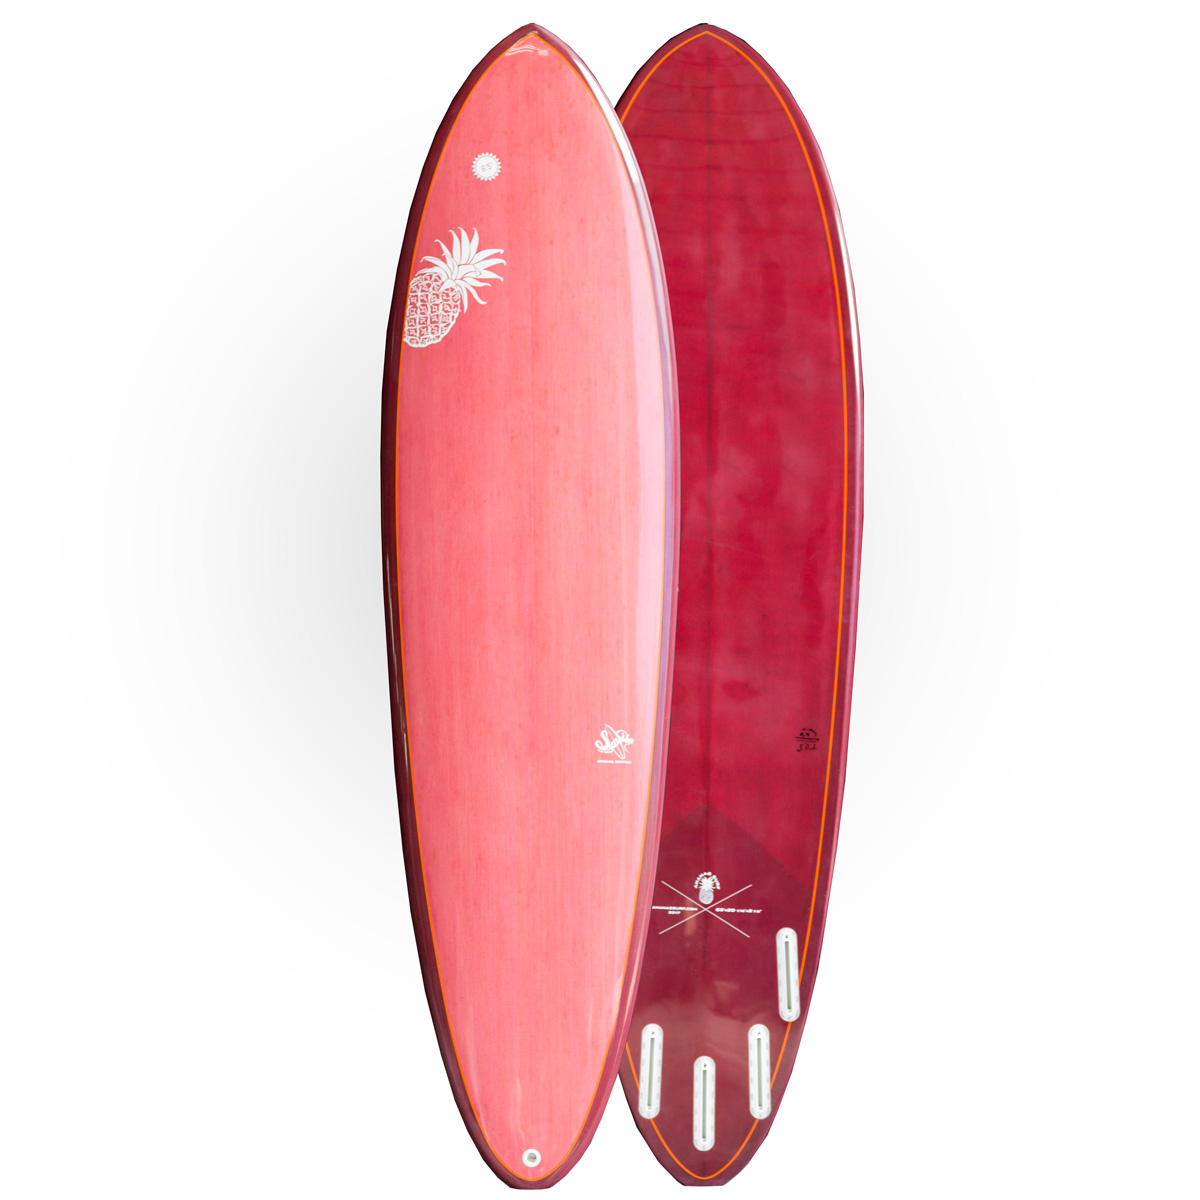 Ananas Surf Firebird surboard 6'5"